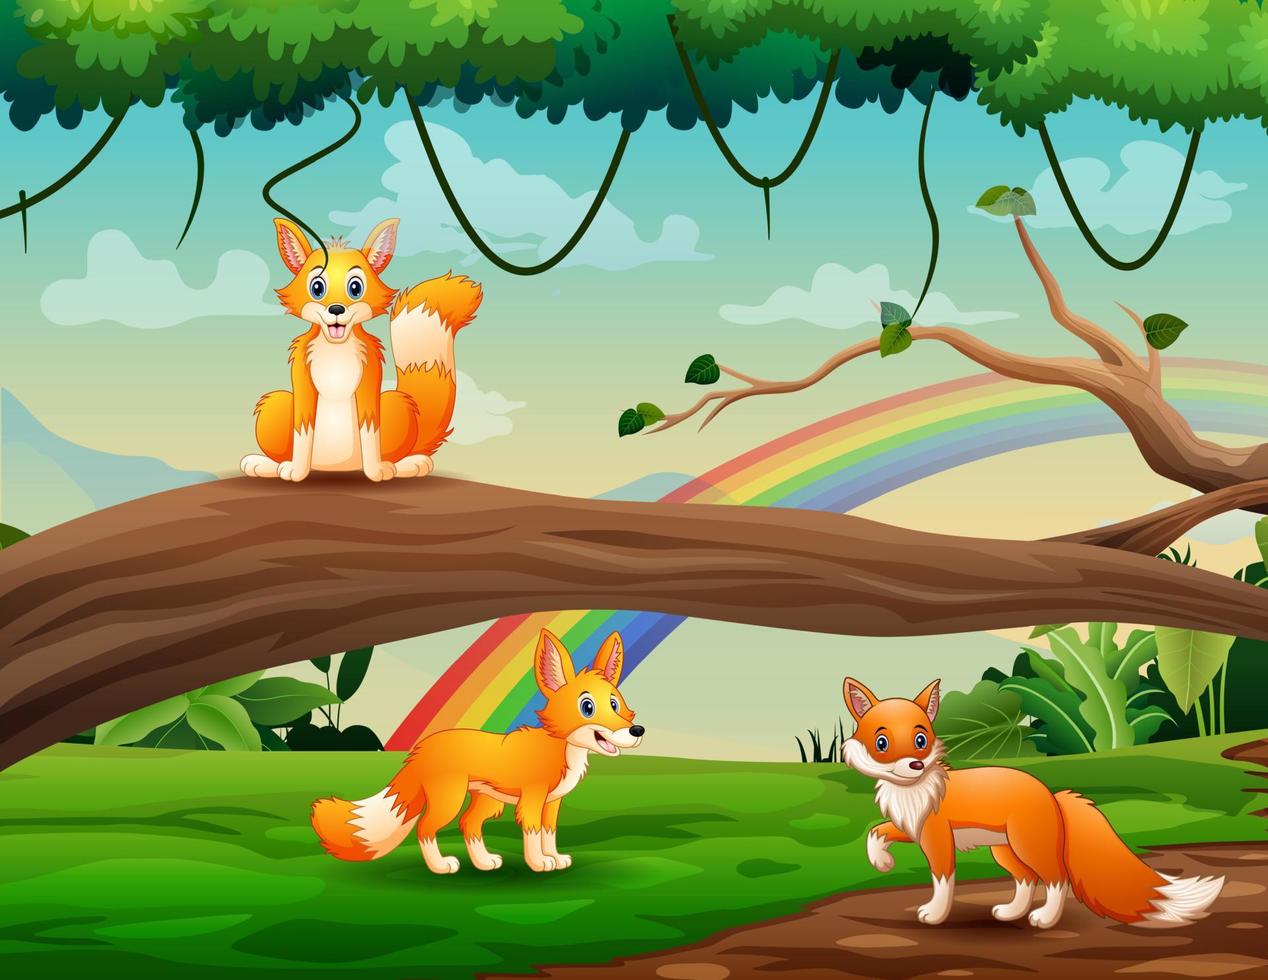 bonito desenho de três raposas brincando na selva vetor